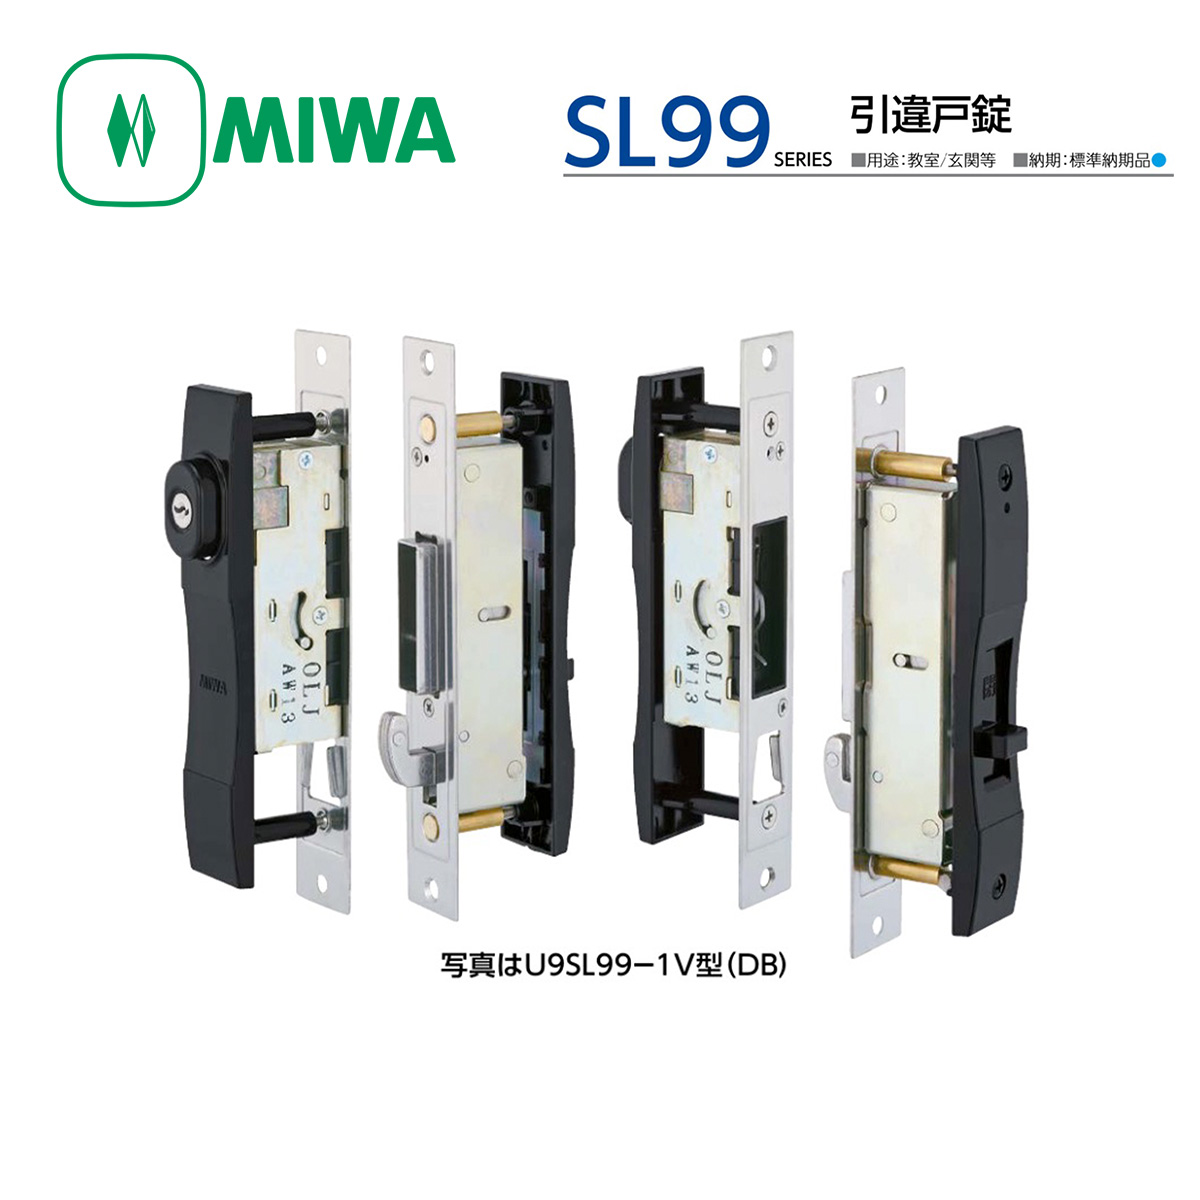 MIWA 【美和ロック】 引戸用グリップハンドル錠 [MIWA-SL99] SL99型 